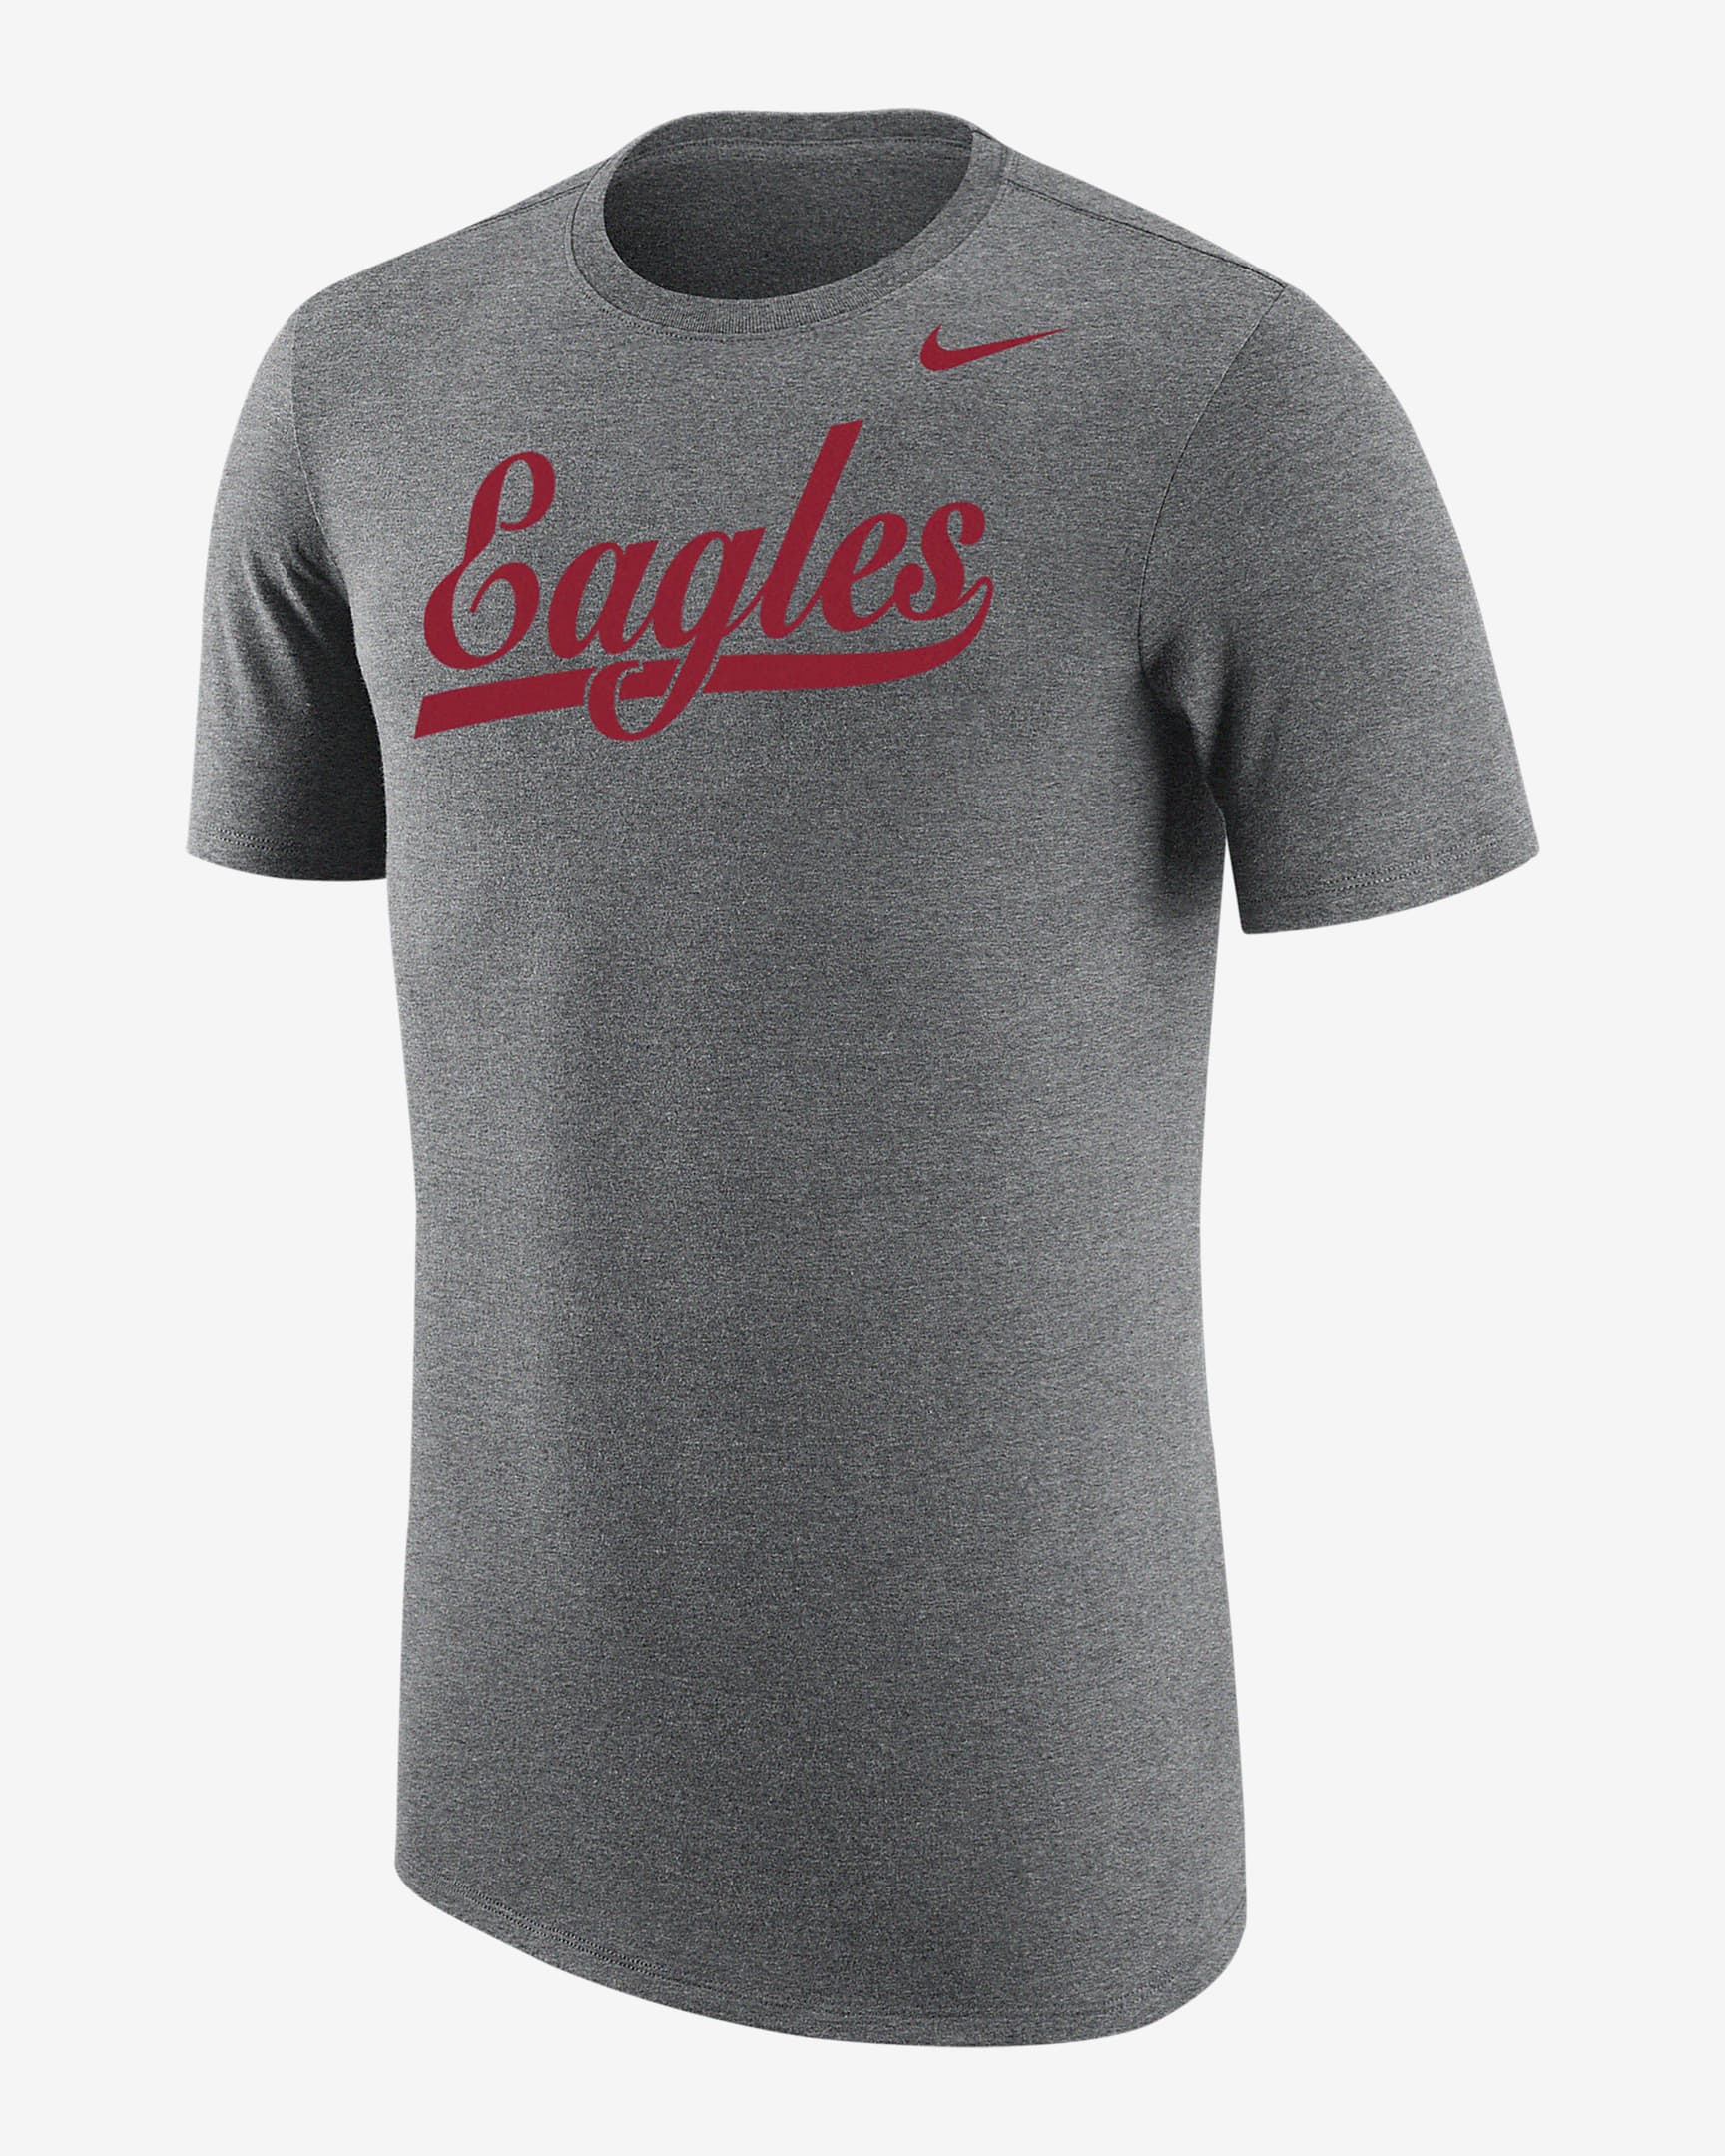 North Carolina Central Men's Nike College T-Shirt. Nike.com